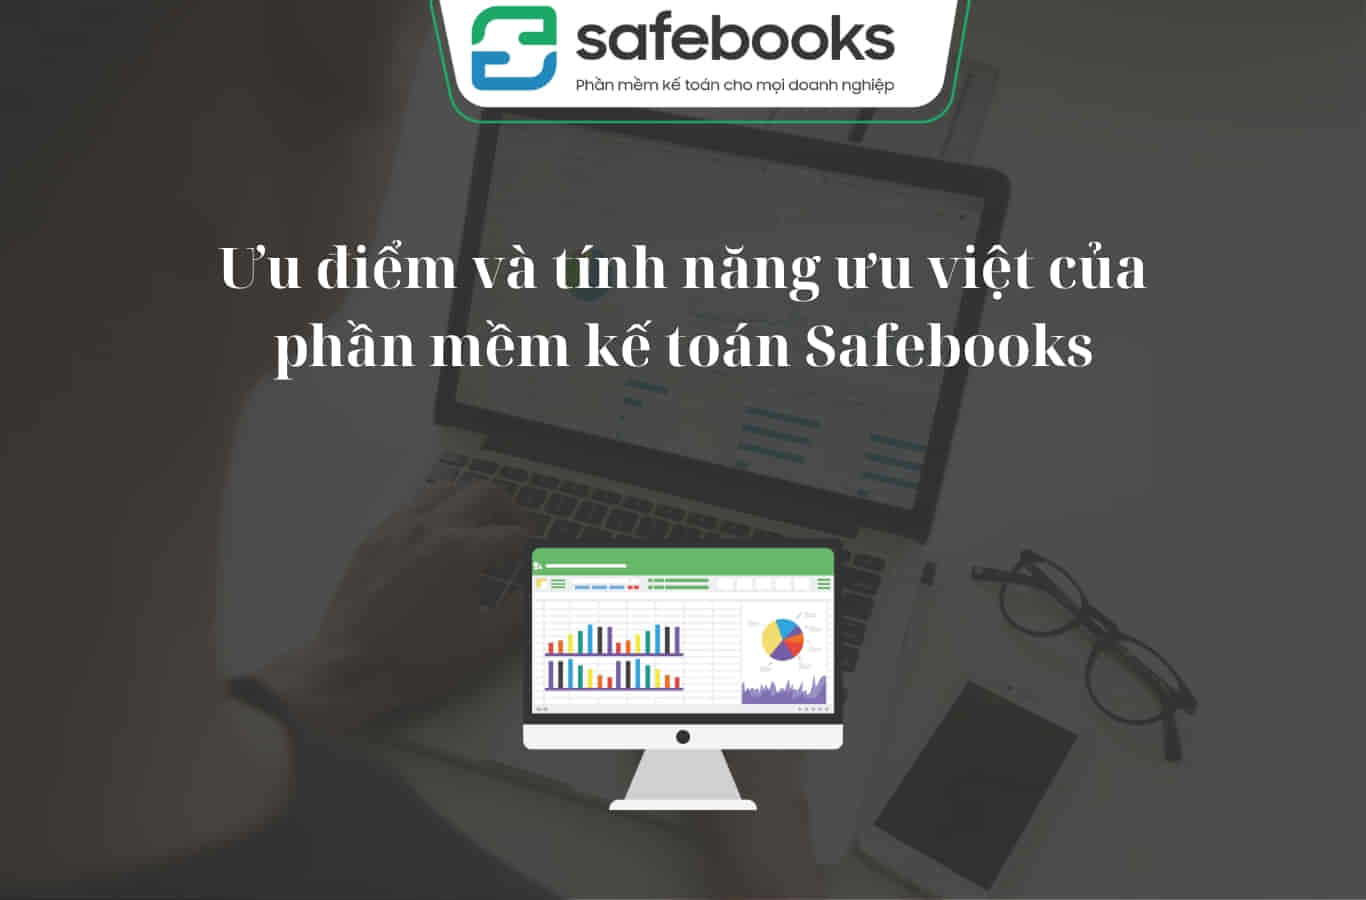 Ưu điểm của phần mềm kế toán Safebooks